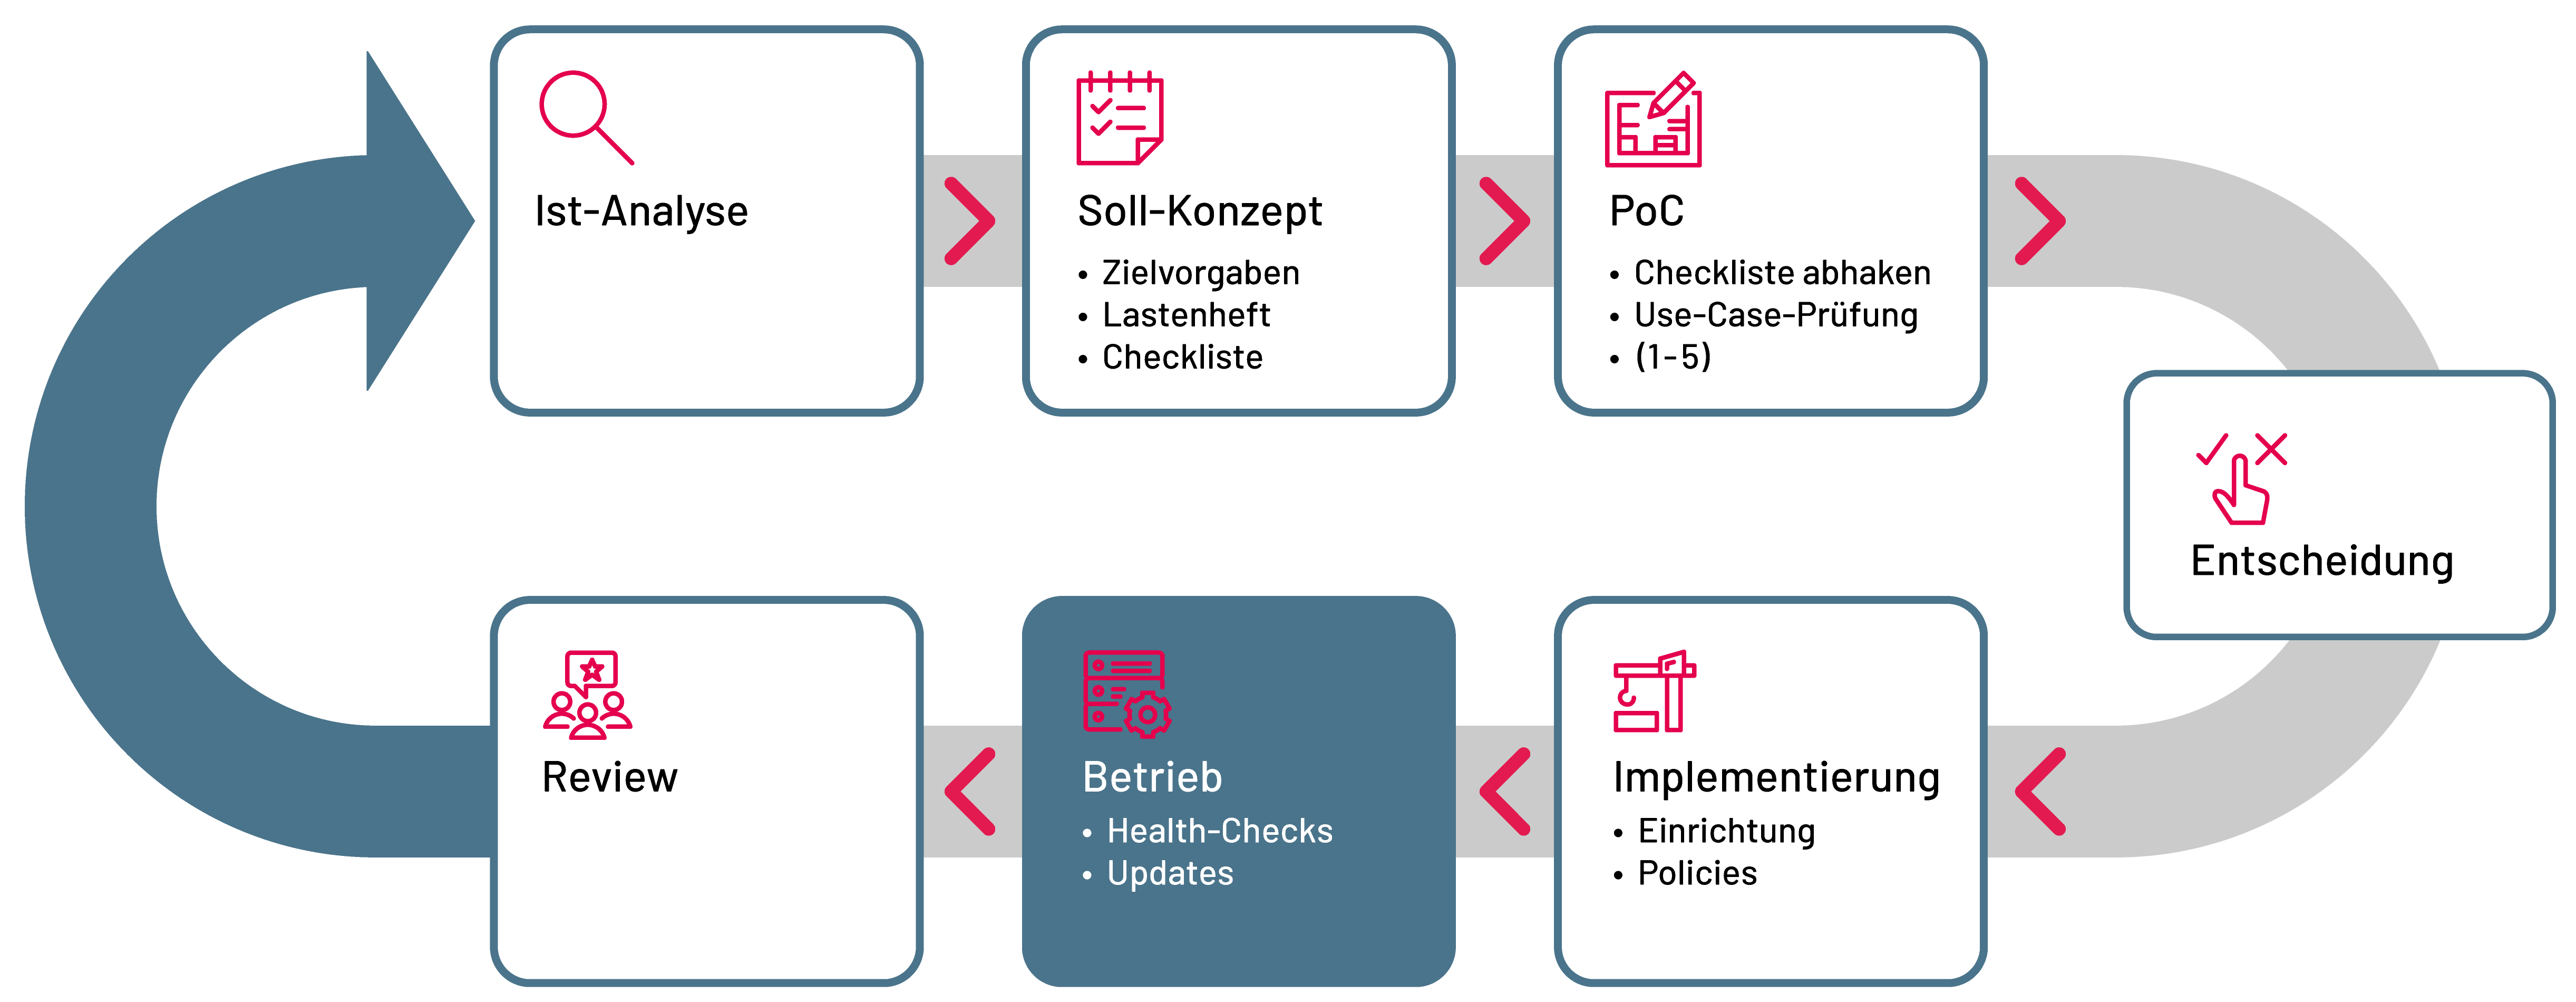 Secure Enterprise Apps - Training und Dokumentation - SYSTAG GmbH